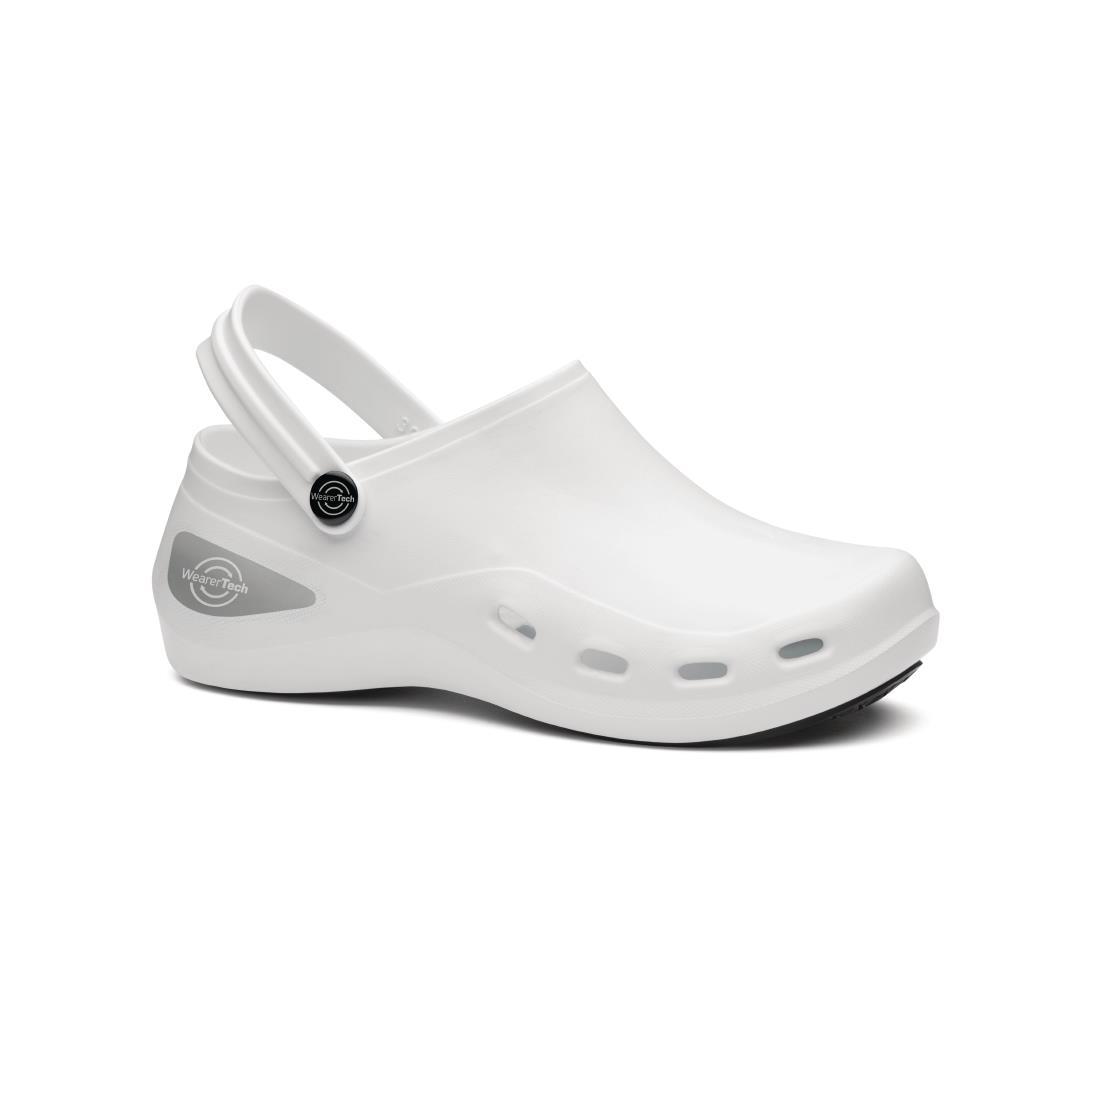 WearerTech Unisex Invigorate White Safety Shoe Size 6 - BB199-39.5  - 2